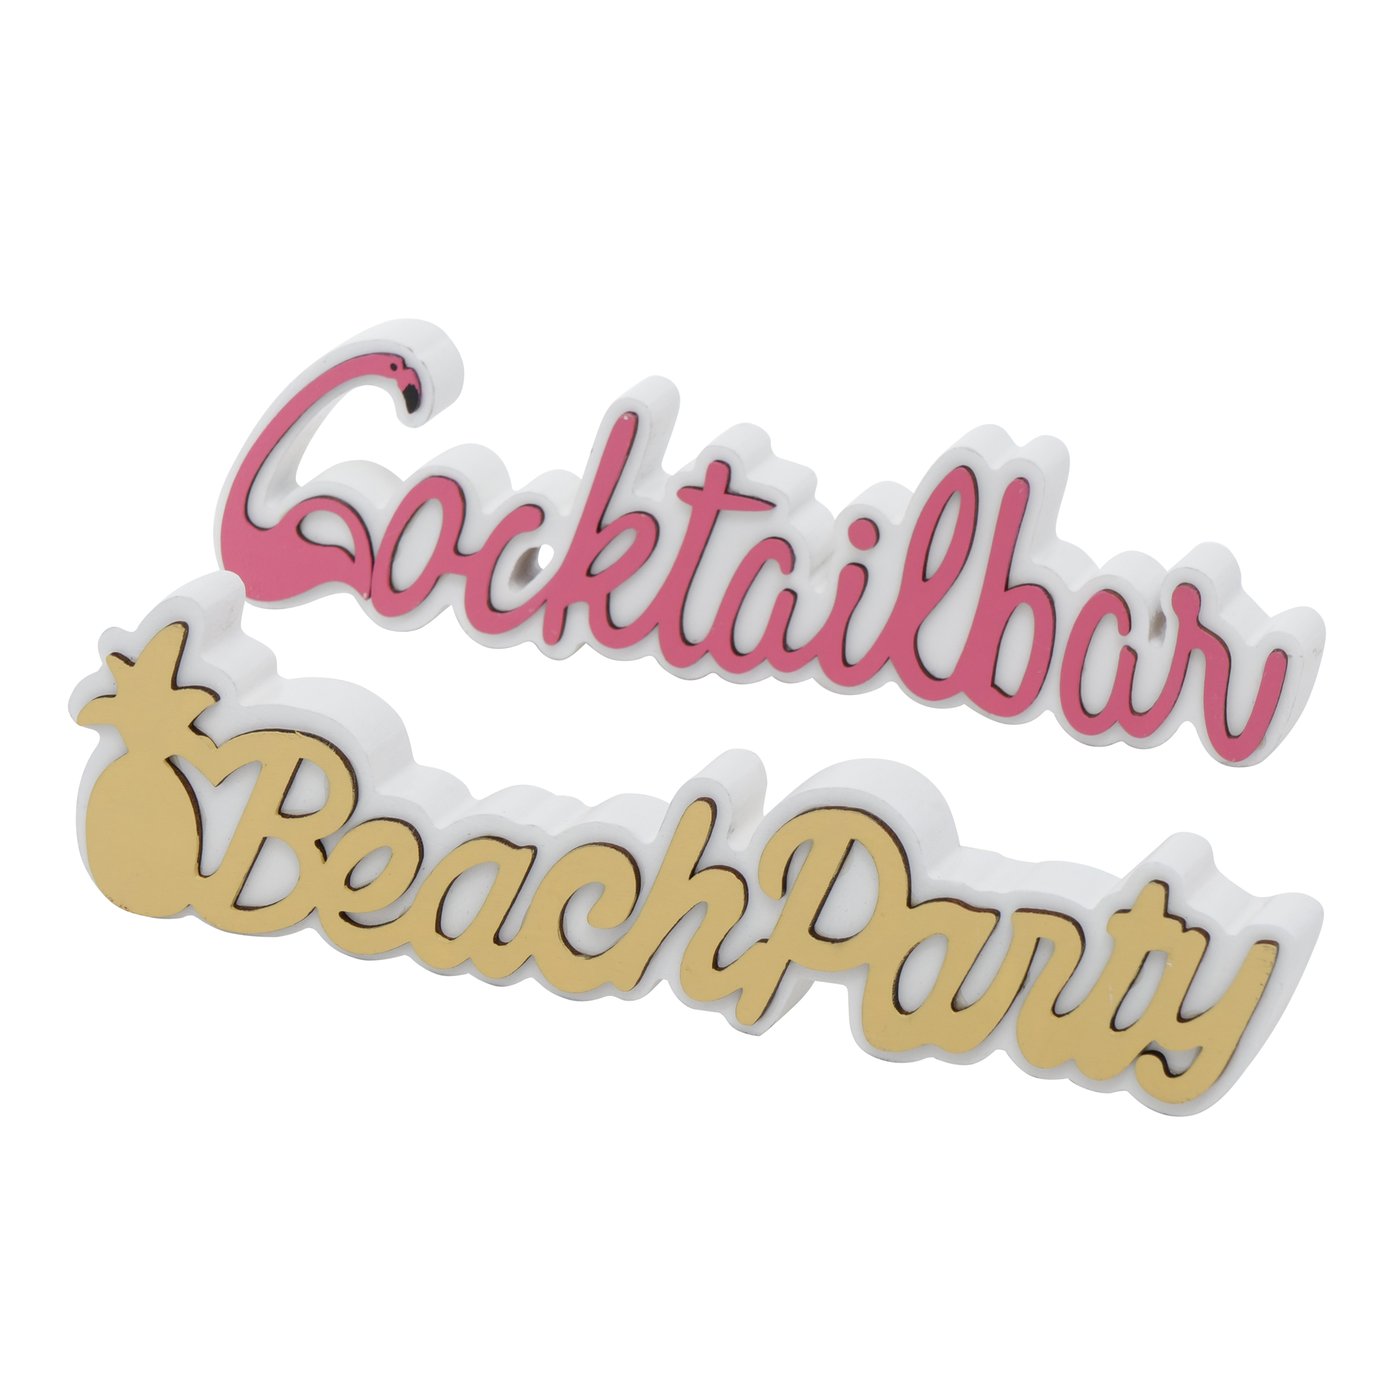 Boltze Gartenparty Aufsteller Schriftzug "Cocktailbar + Beachparty", 1021651, 4020607740761, Sommerparty Boltze